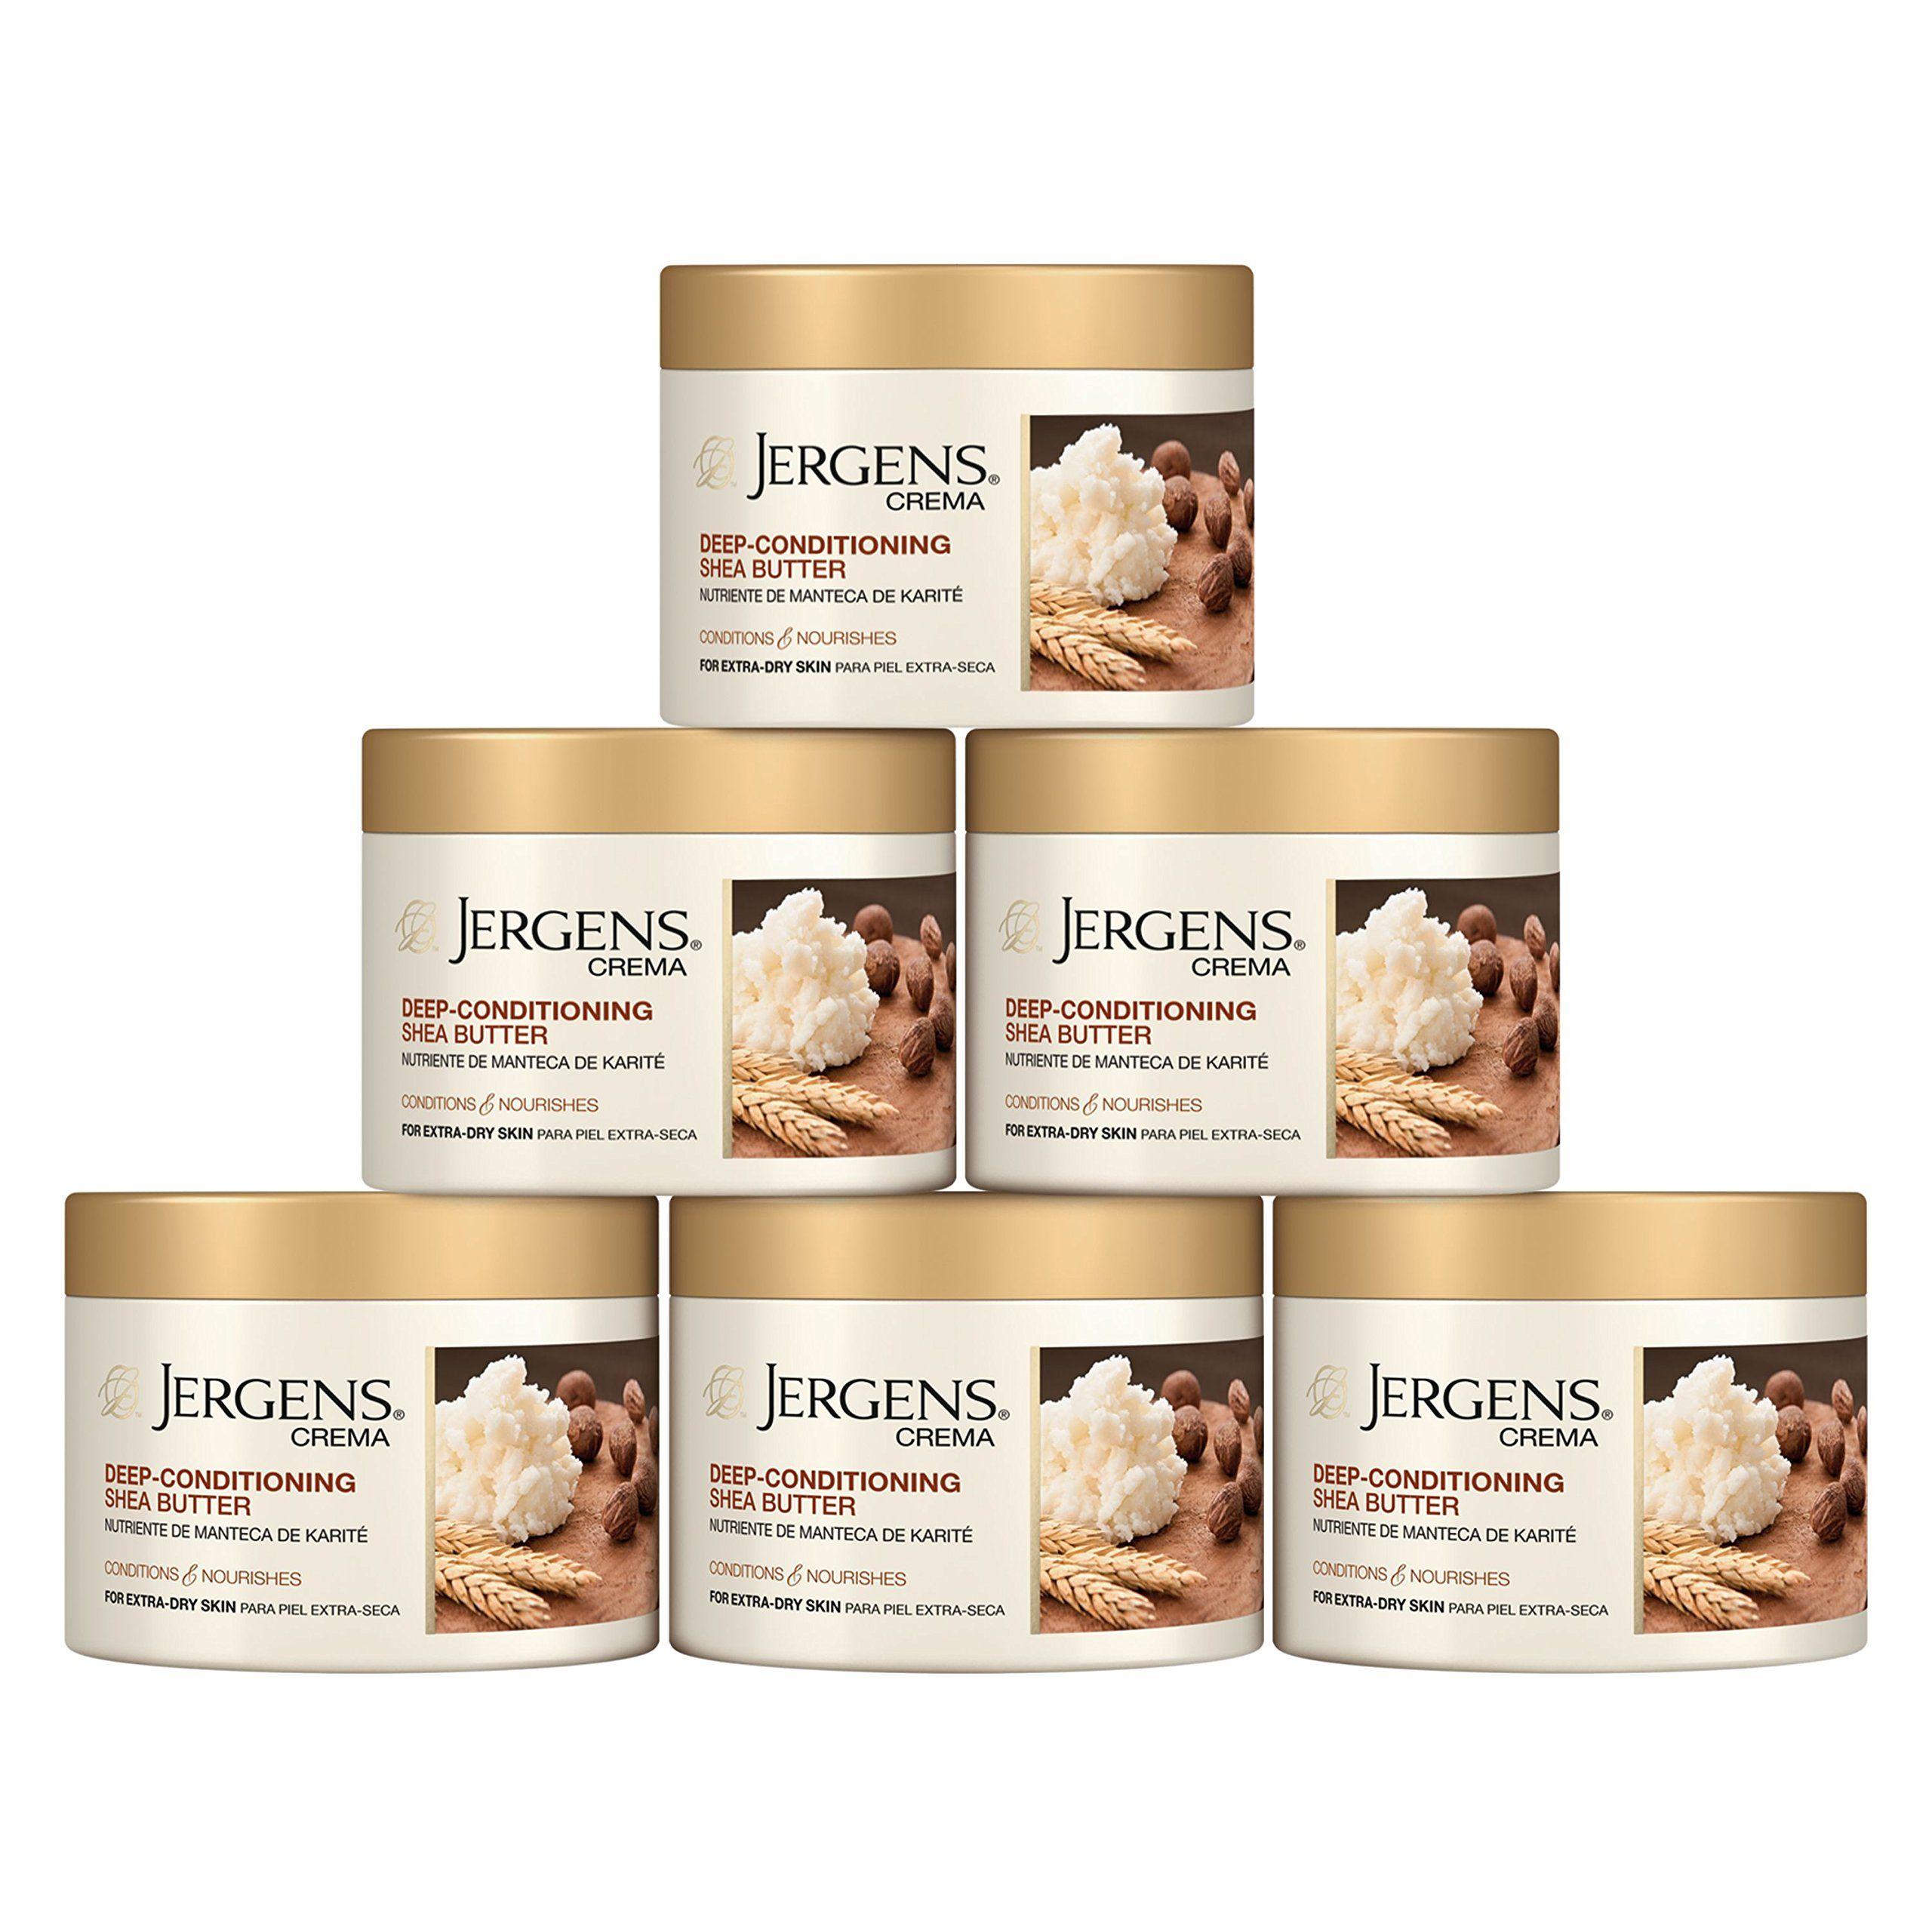 Jergens Logo - Amazon.com : Jergens Crema Deep-Conditioning Shea Butter Body Cream ...